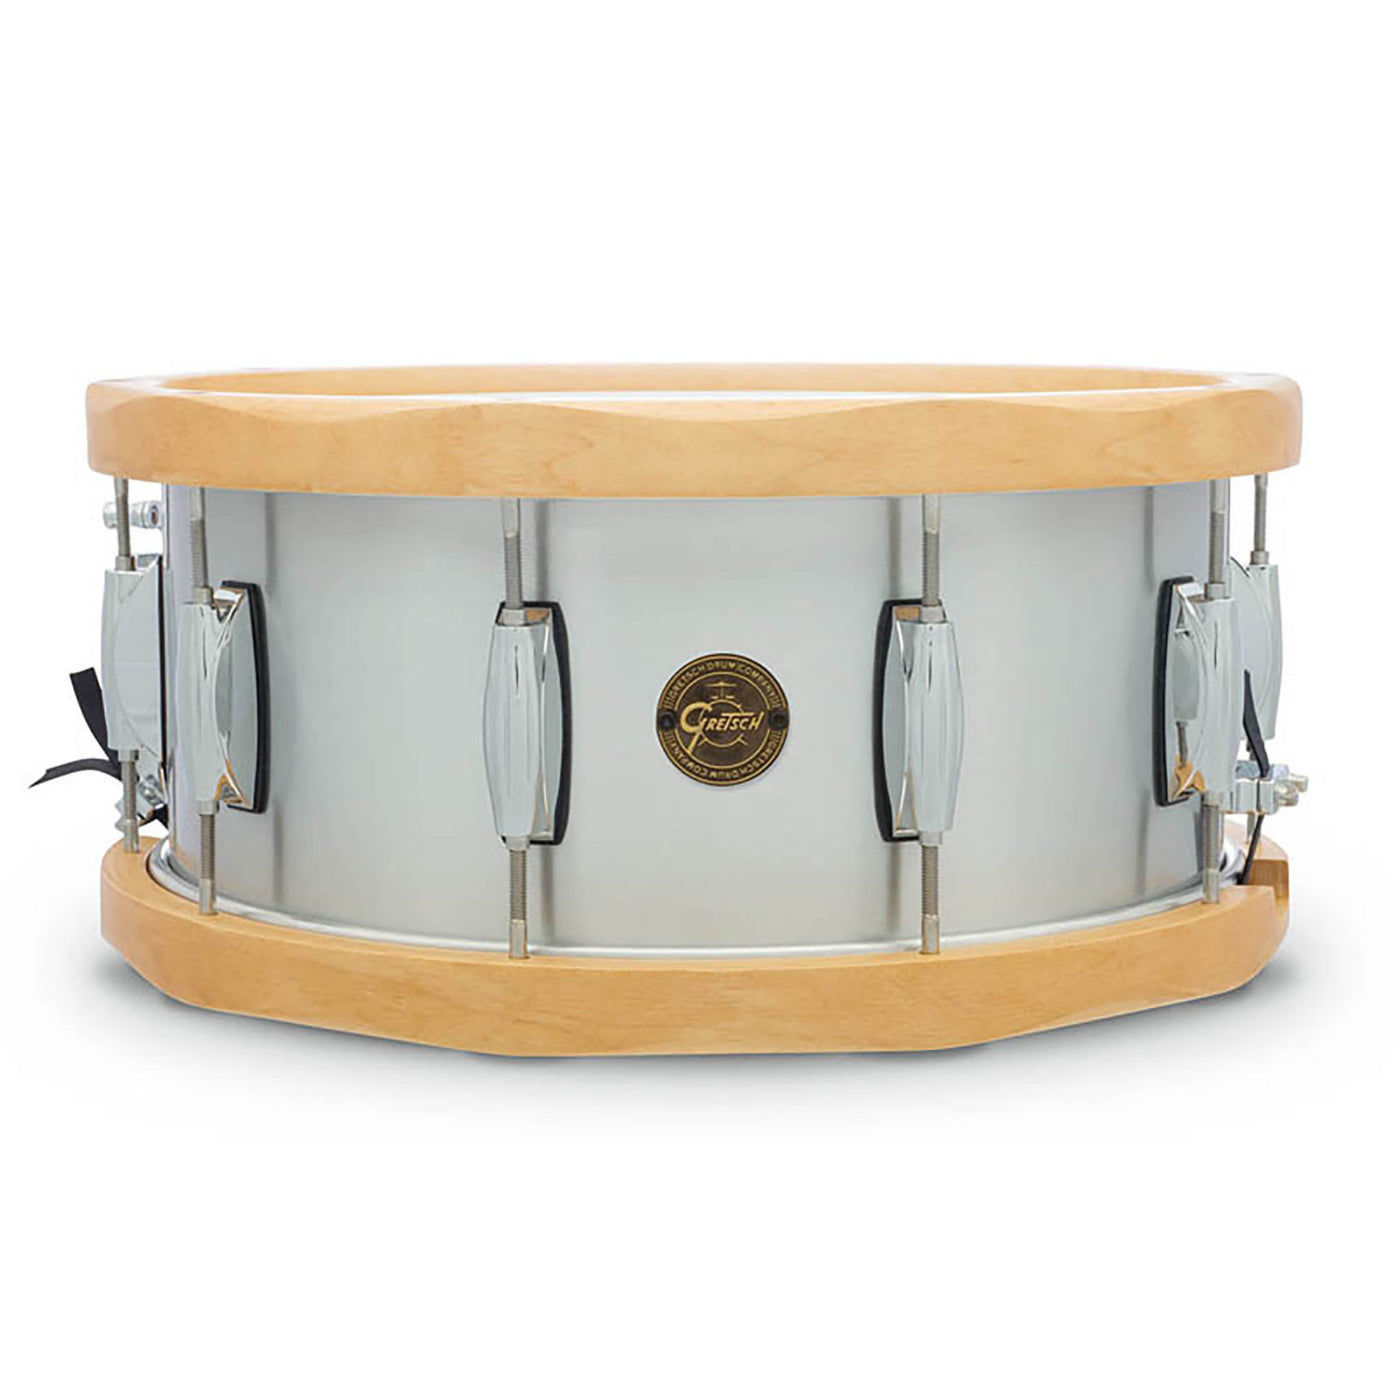 Gretsch Drums Gold Series 6.5x14" Wood Hoop Aluminum Snare Drum